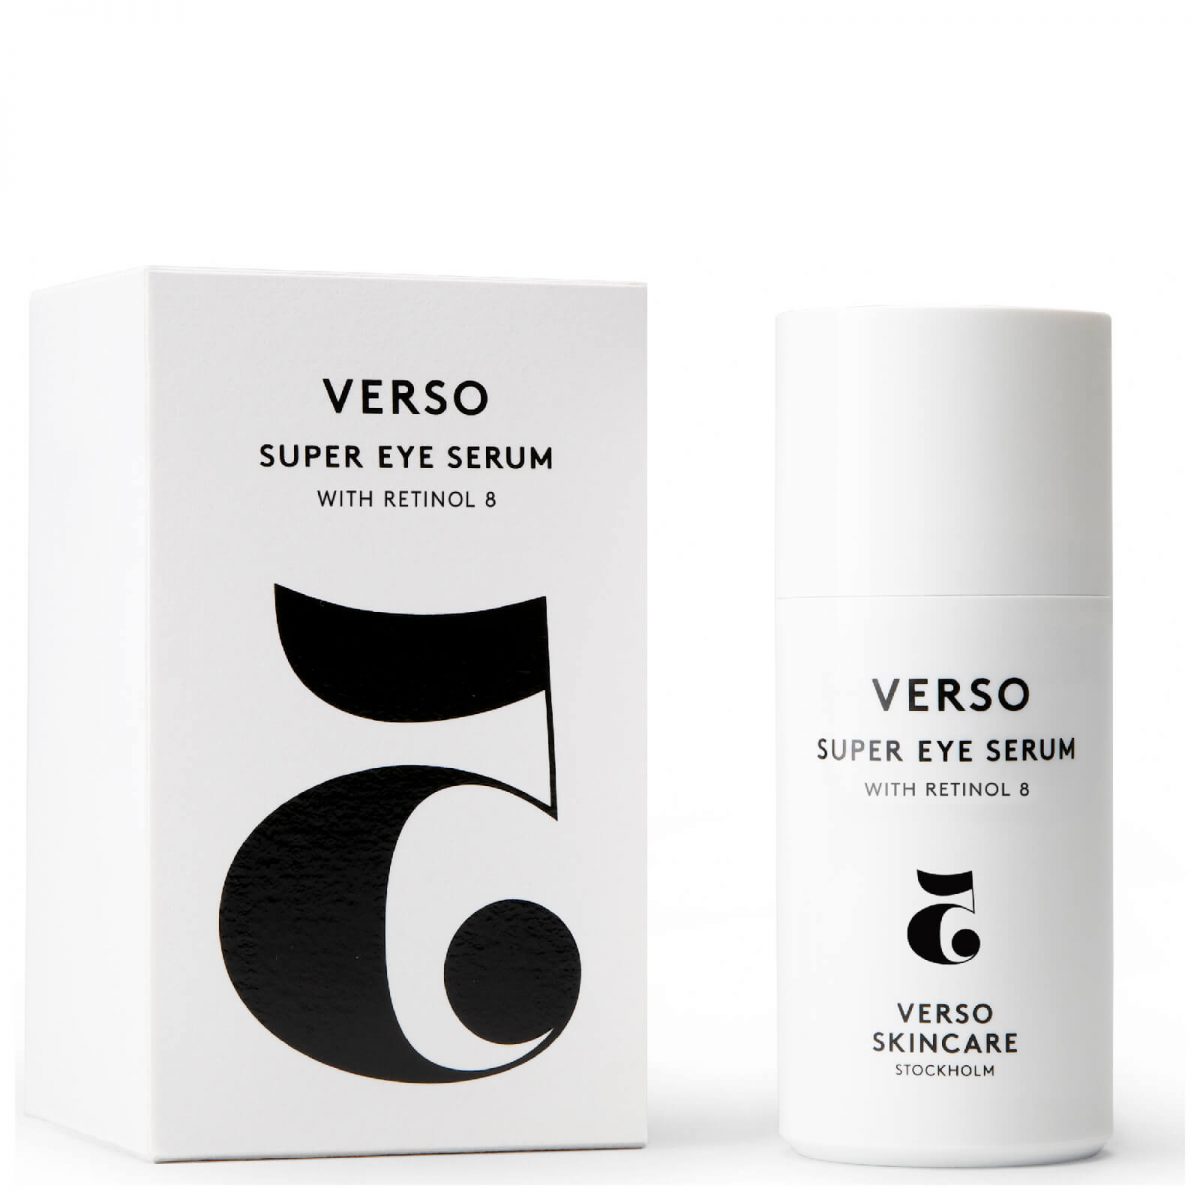 Shop VERSO Super Eye Serum at Look Fantastic